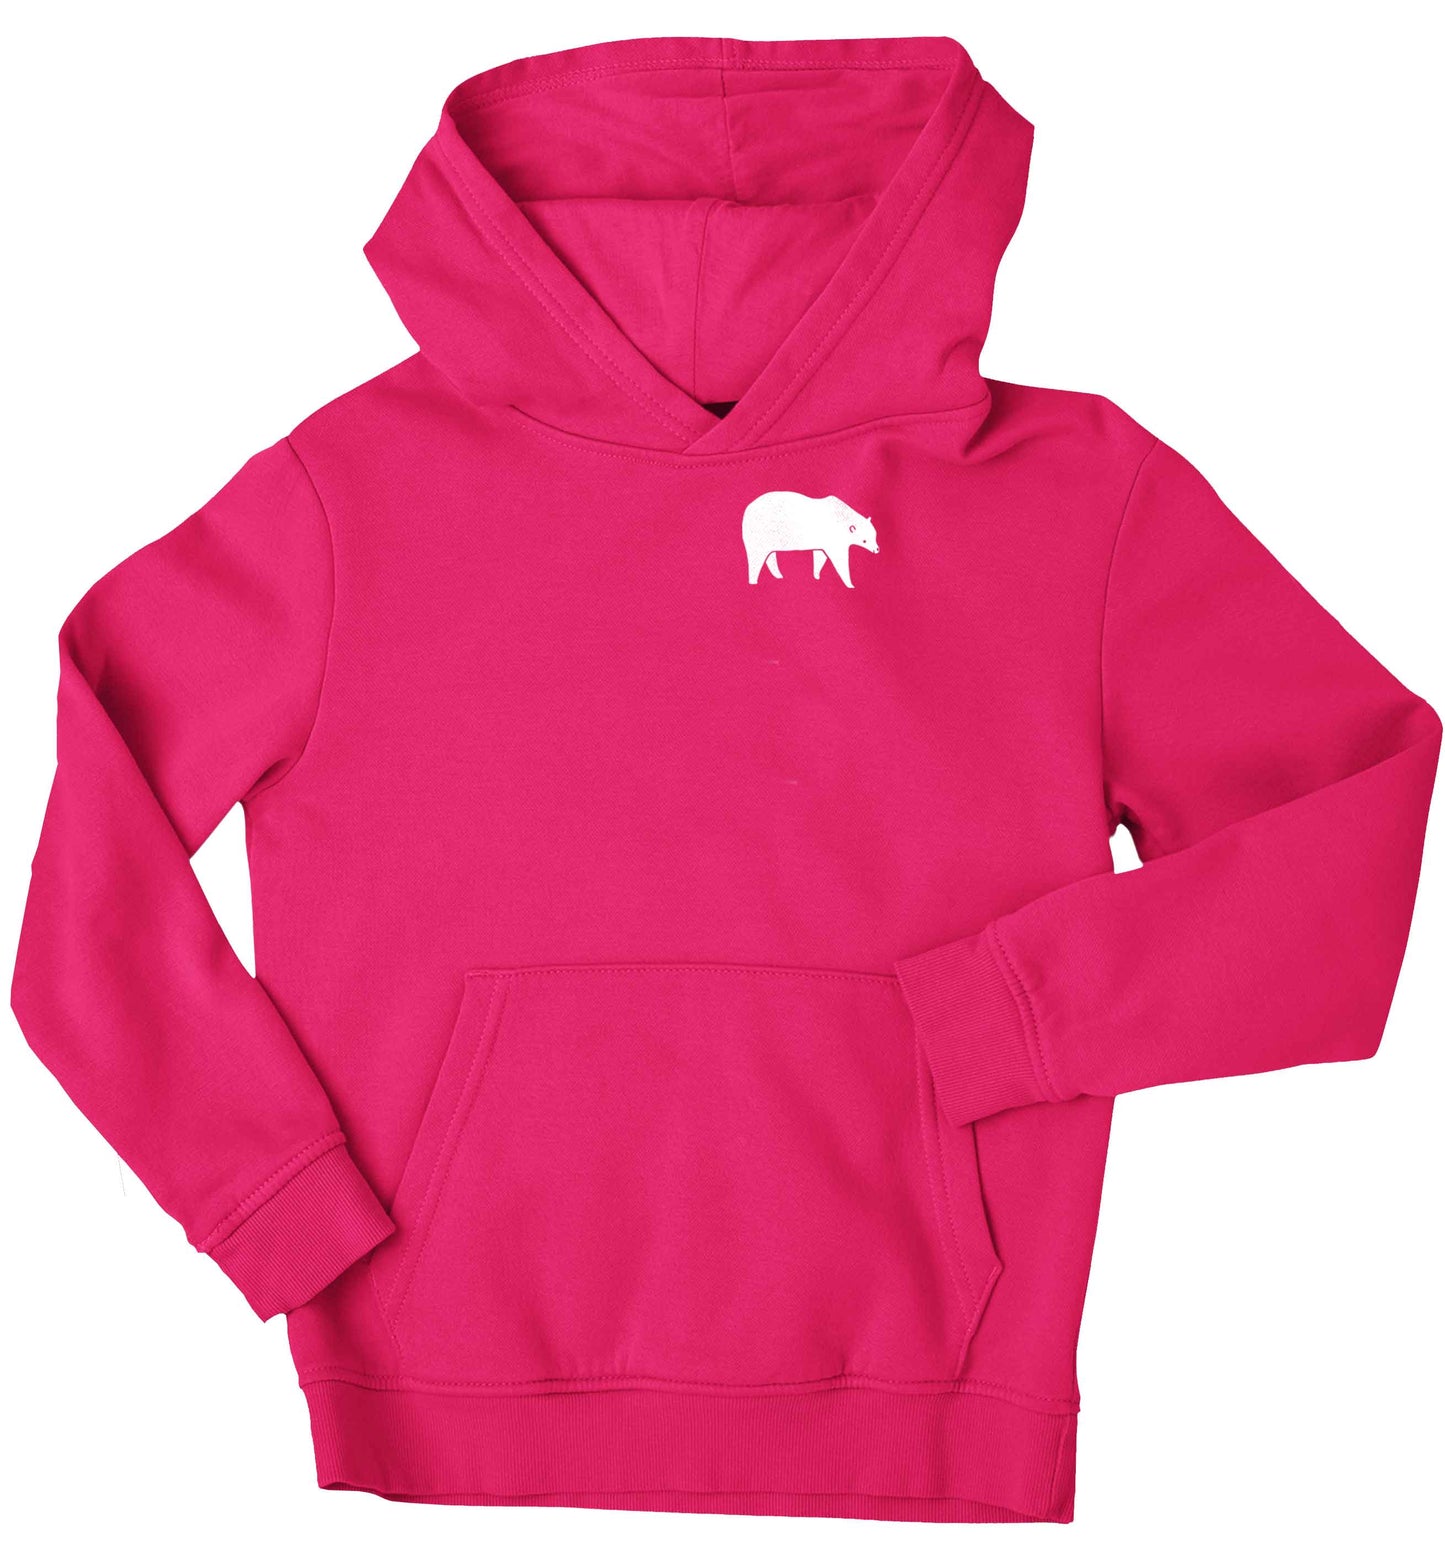 Polar Bear Kit children's pink hoodie 12-13 Years